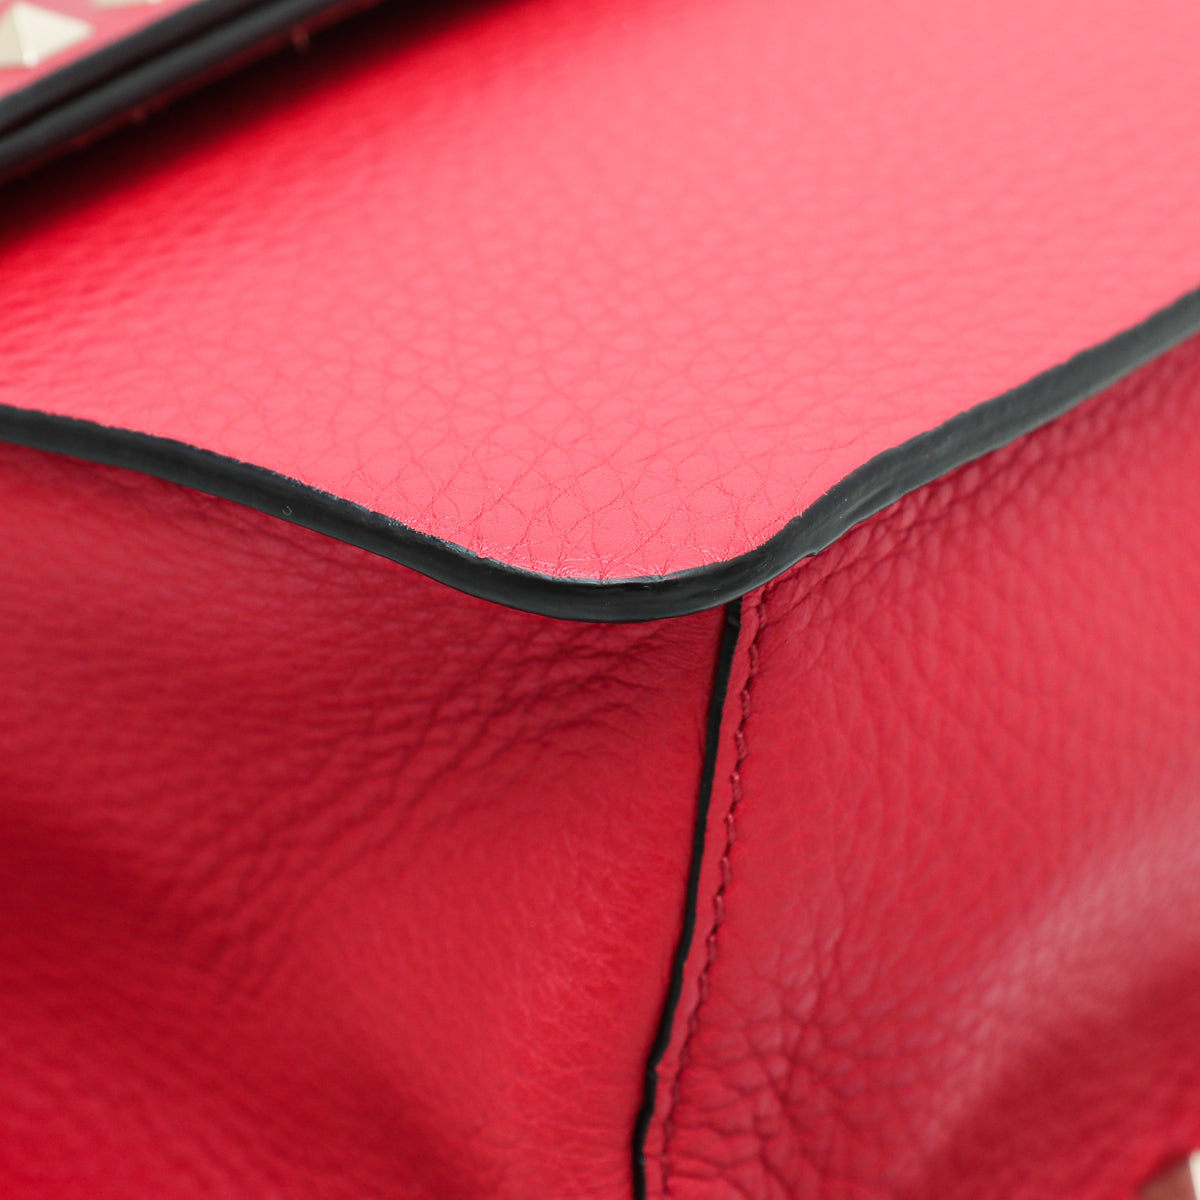 Valentino Red Rockstud Flap Bag